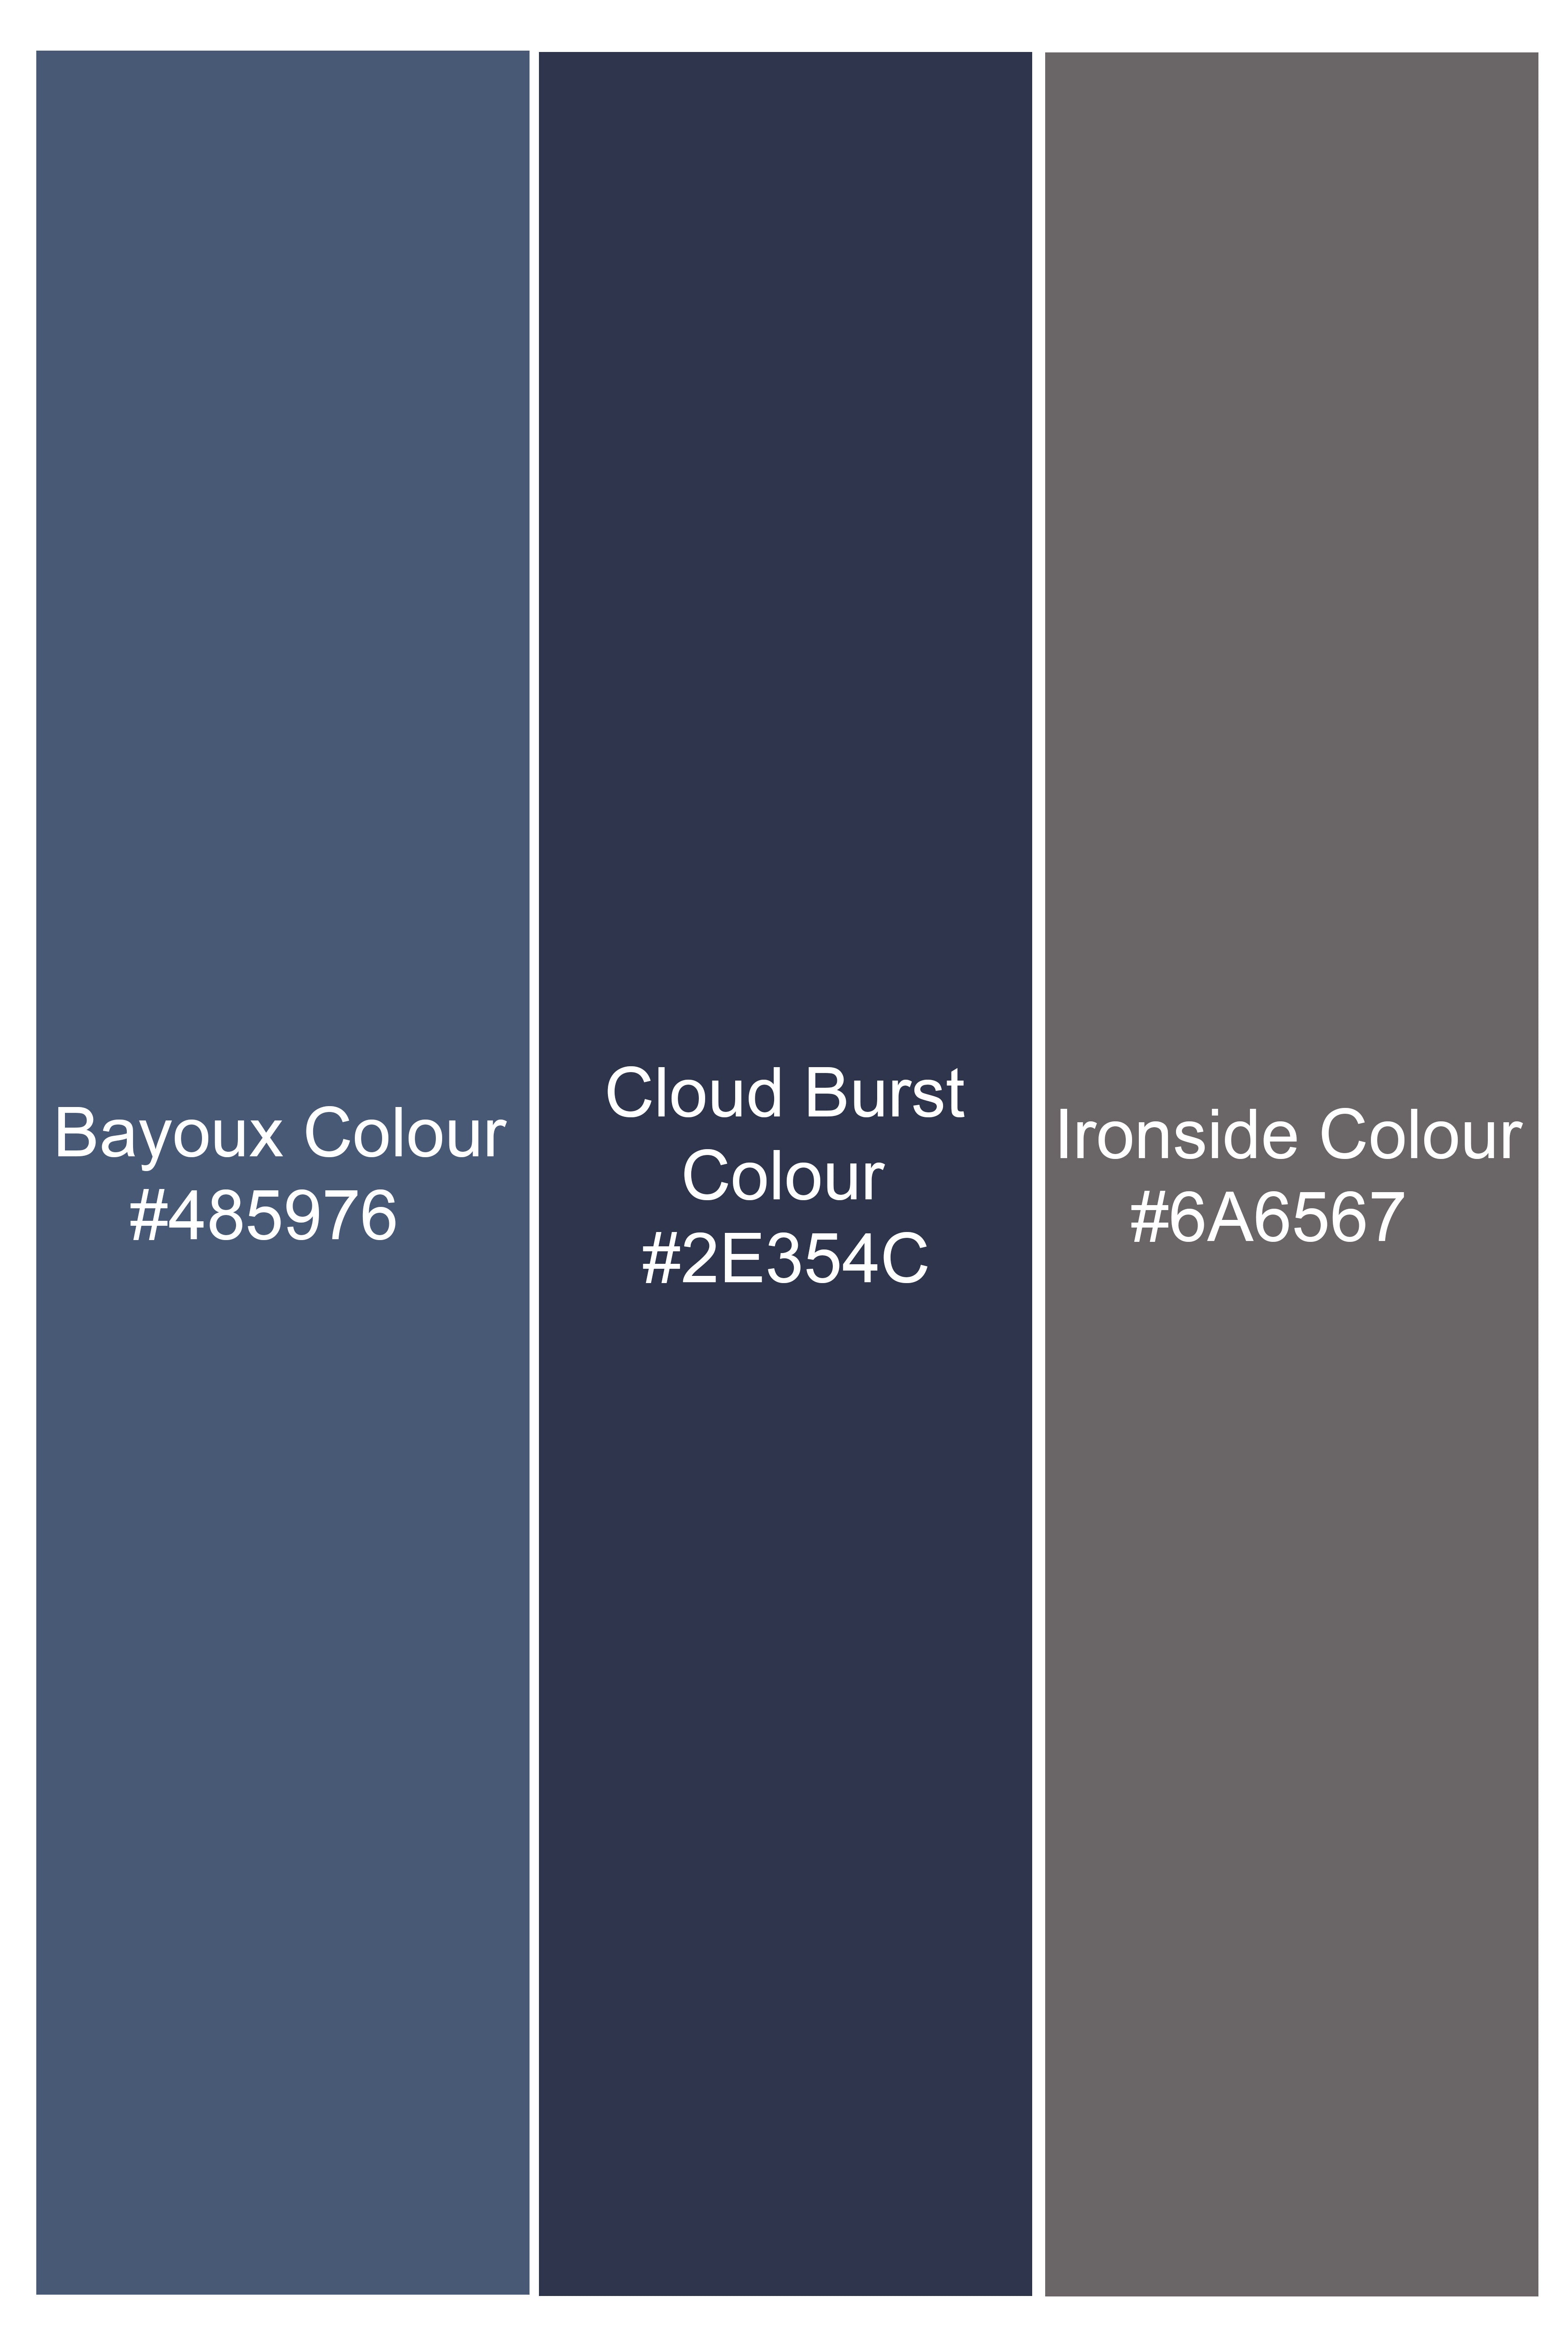 Bayoux Blue and Ironside Gray Plaid Waistcoat V2908-36, V2908-38, V2908-40, V2908-42, V2908-44, V2908-46, V2908-48, V2908-50, V2908-08, V2908-54, V2908-56, V2908-58, V2908-60